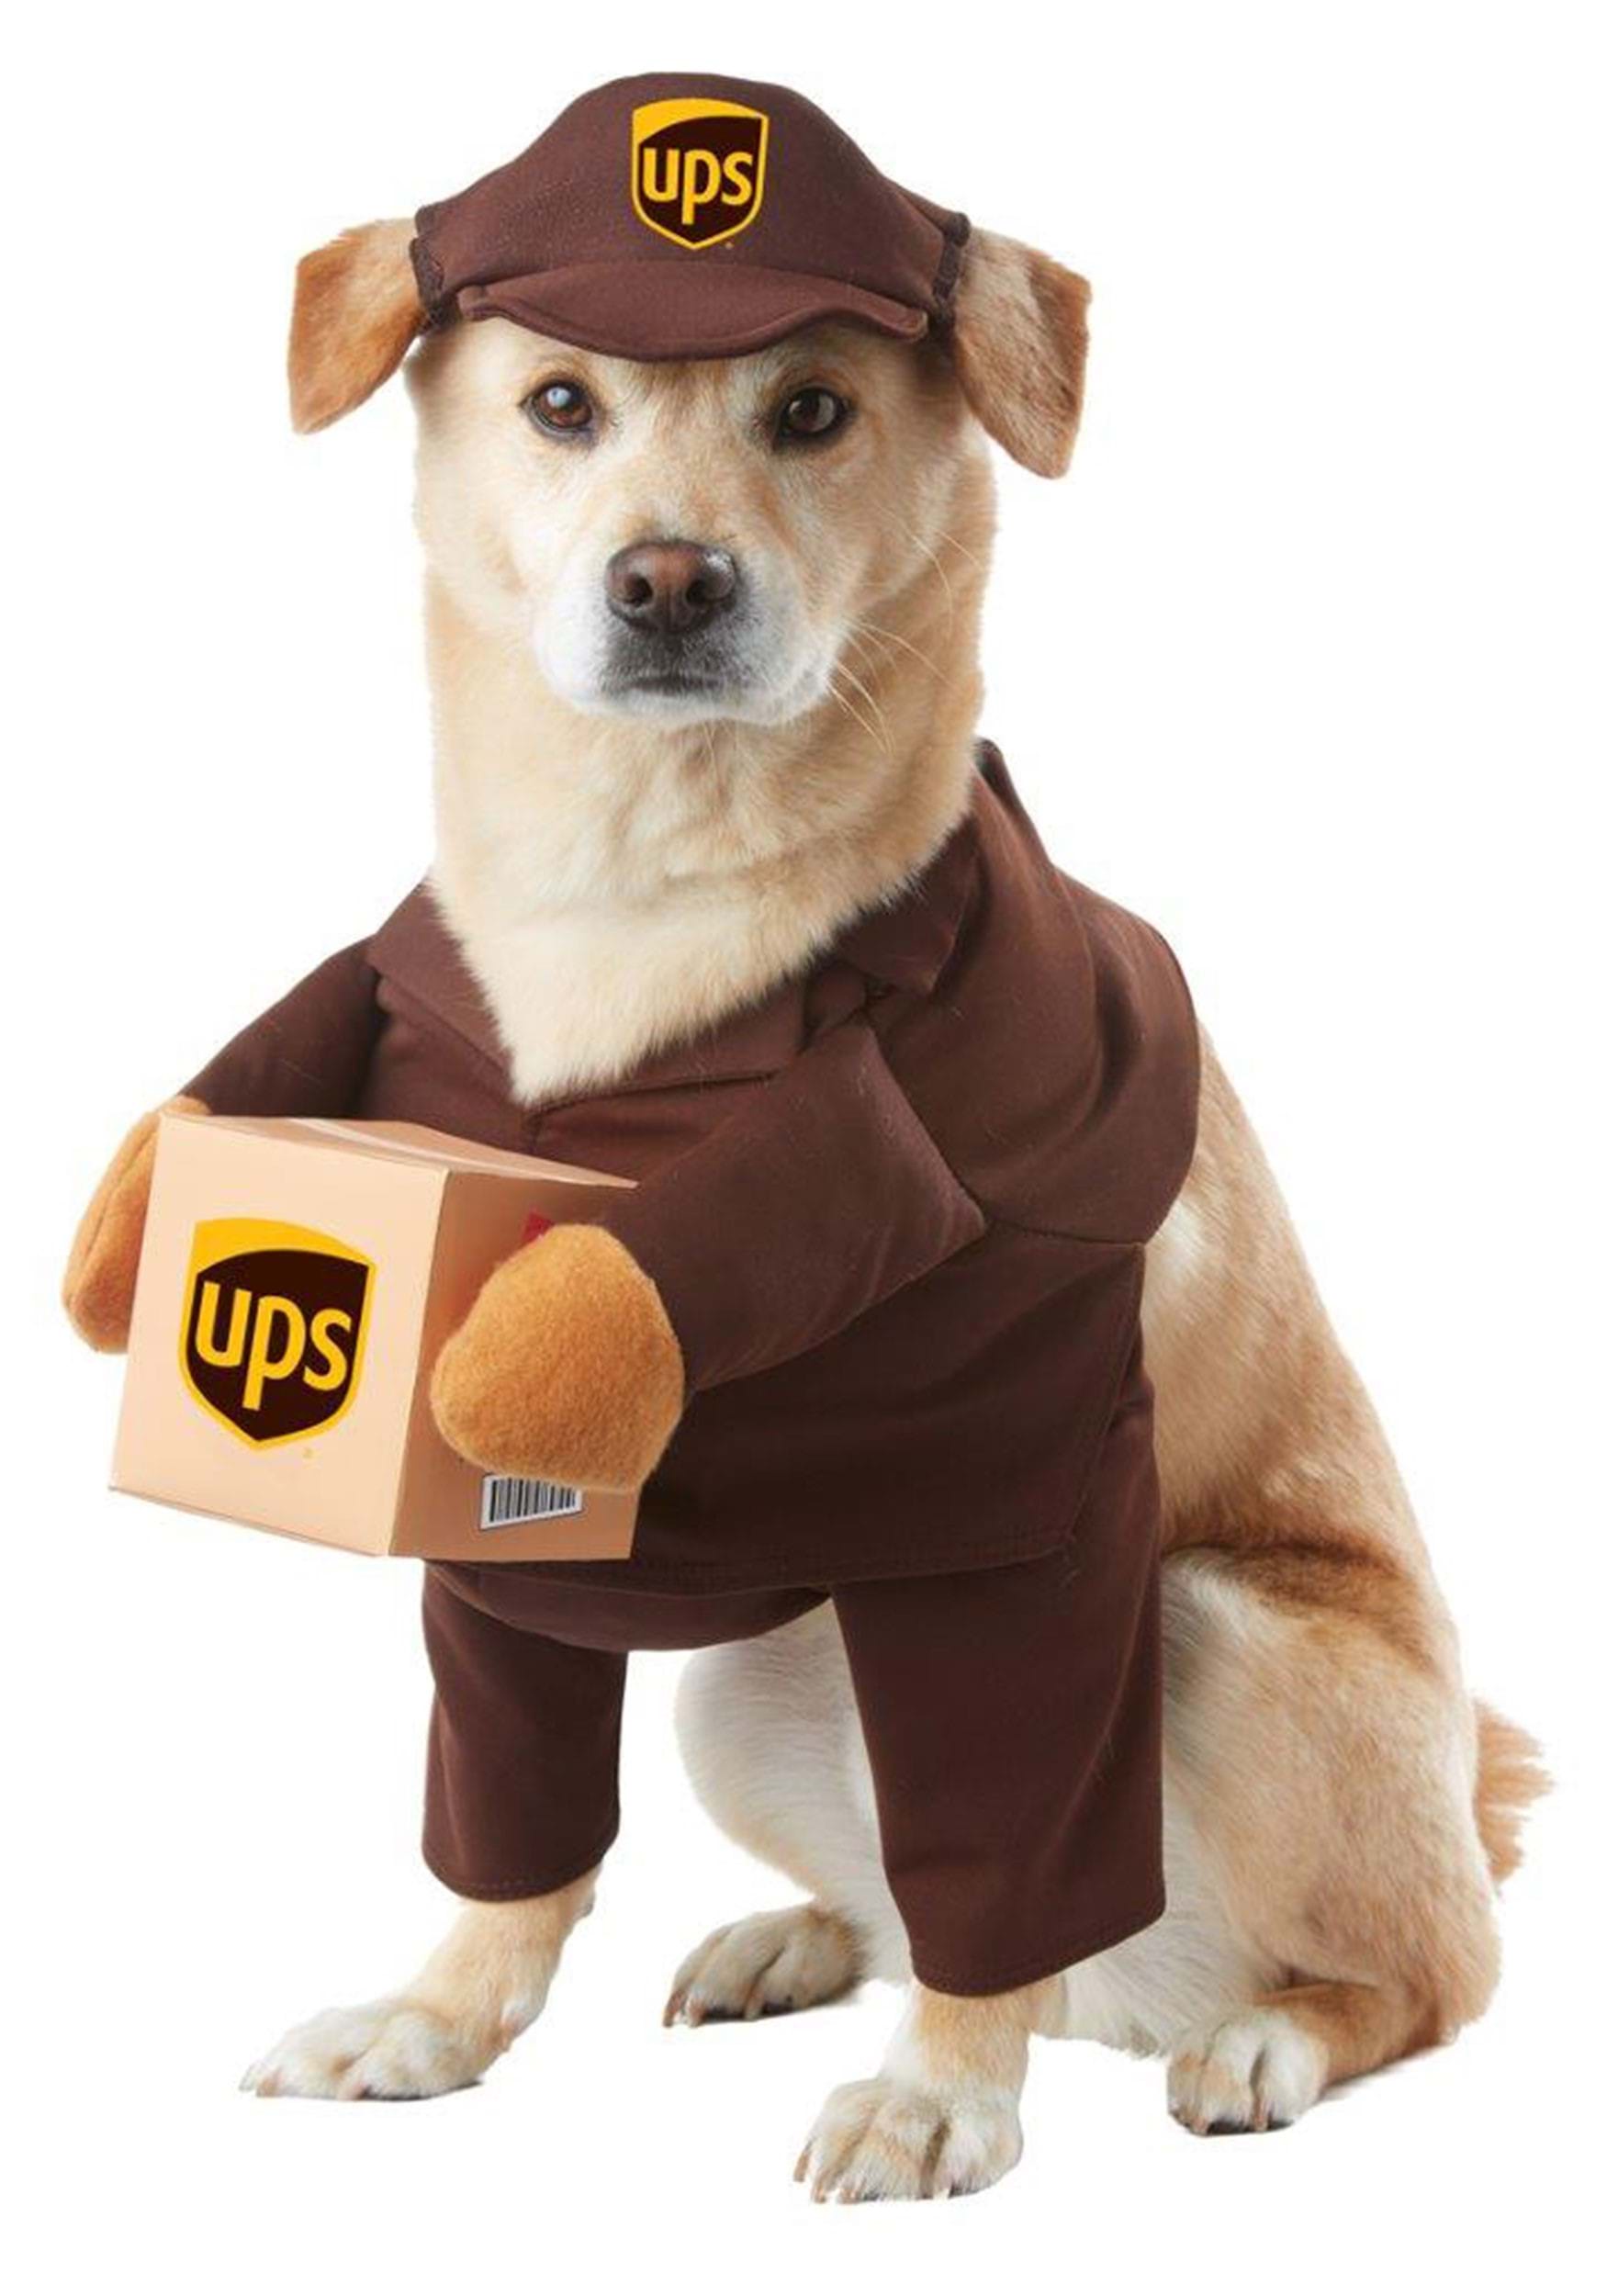 Dog Wearing Costume